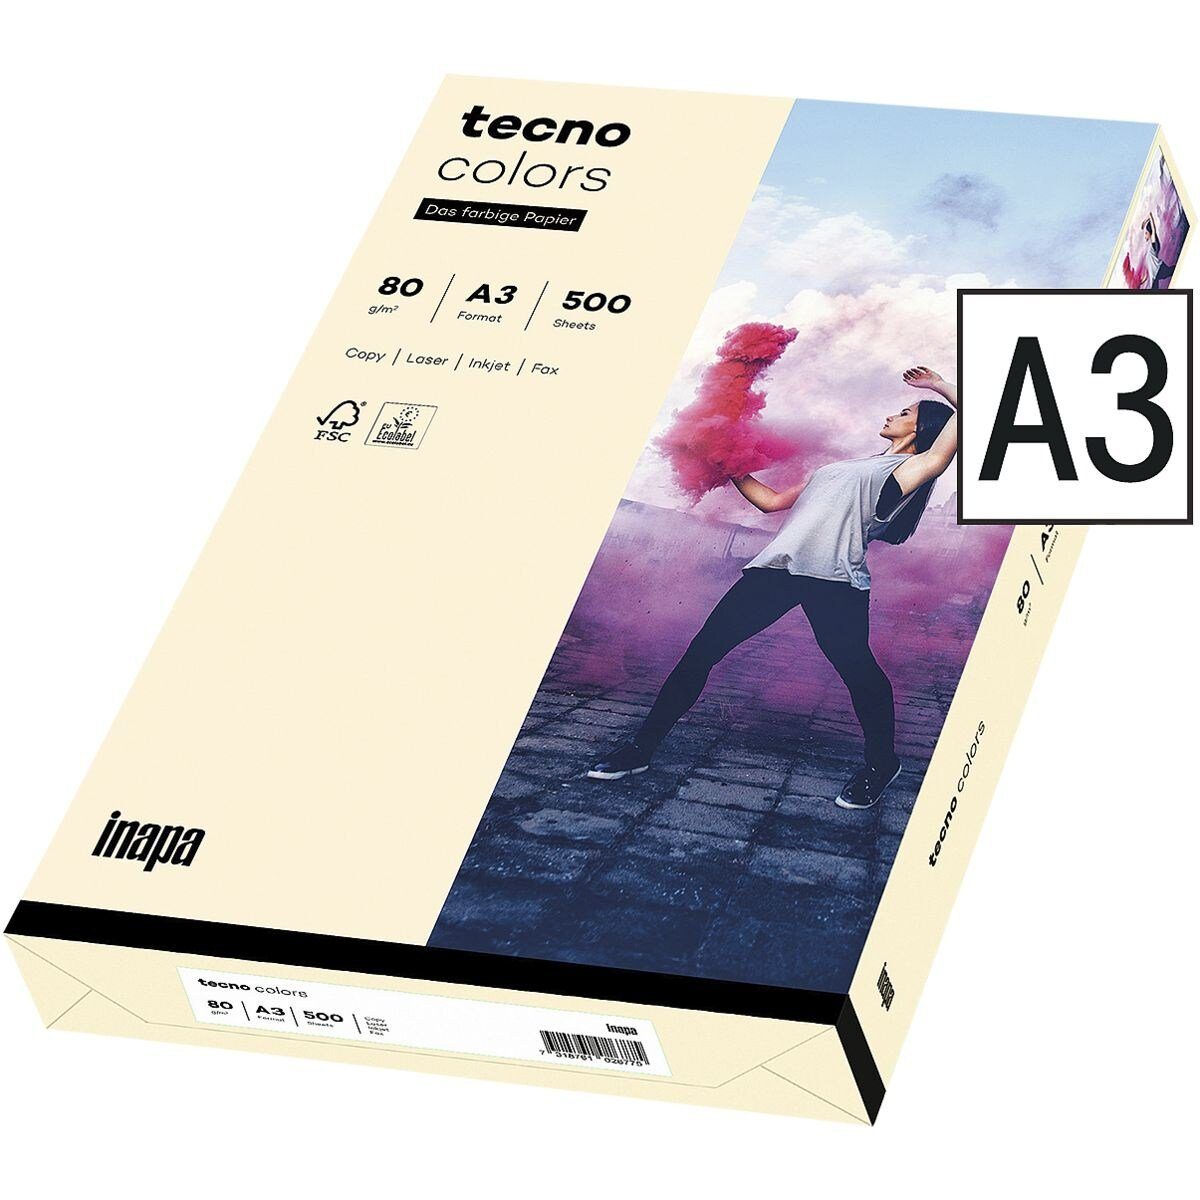 Inapa tecno Drucker- und Kopierpapier Rainbow / tecno Colors, Pastellfarben, Format DIN A3, 80 g/m², 500 Blatt hellchamois